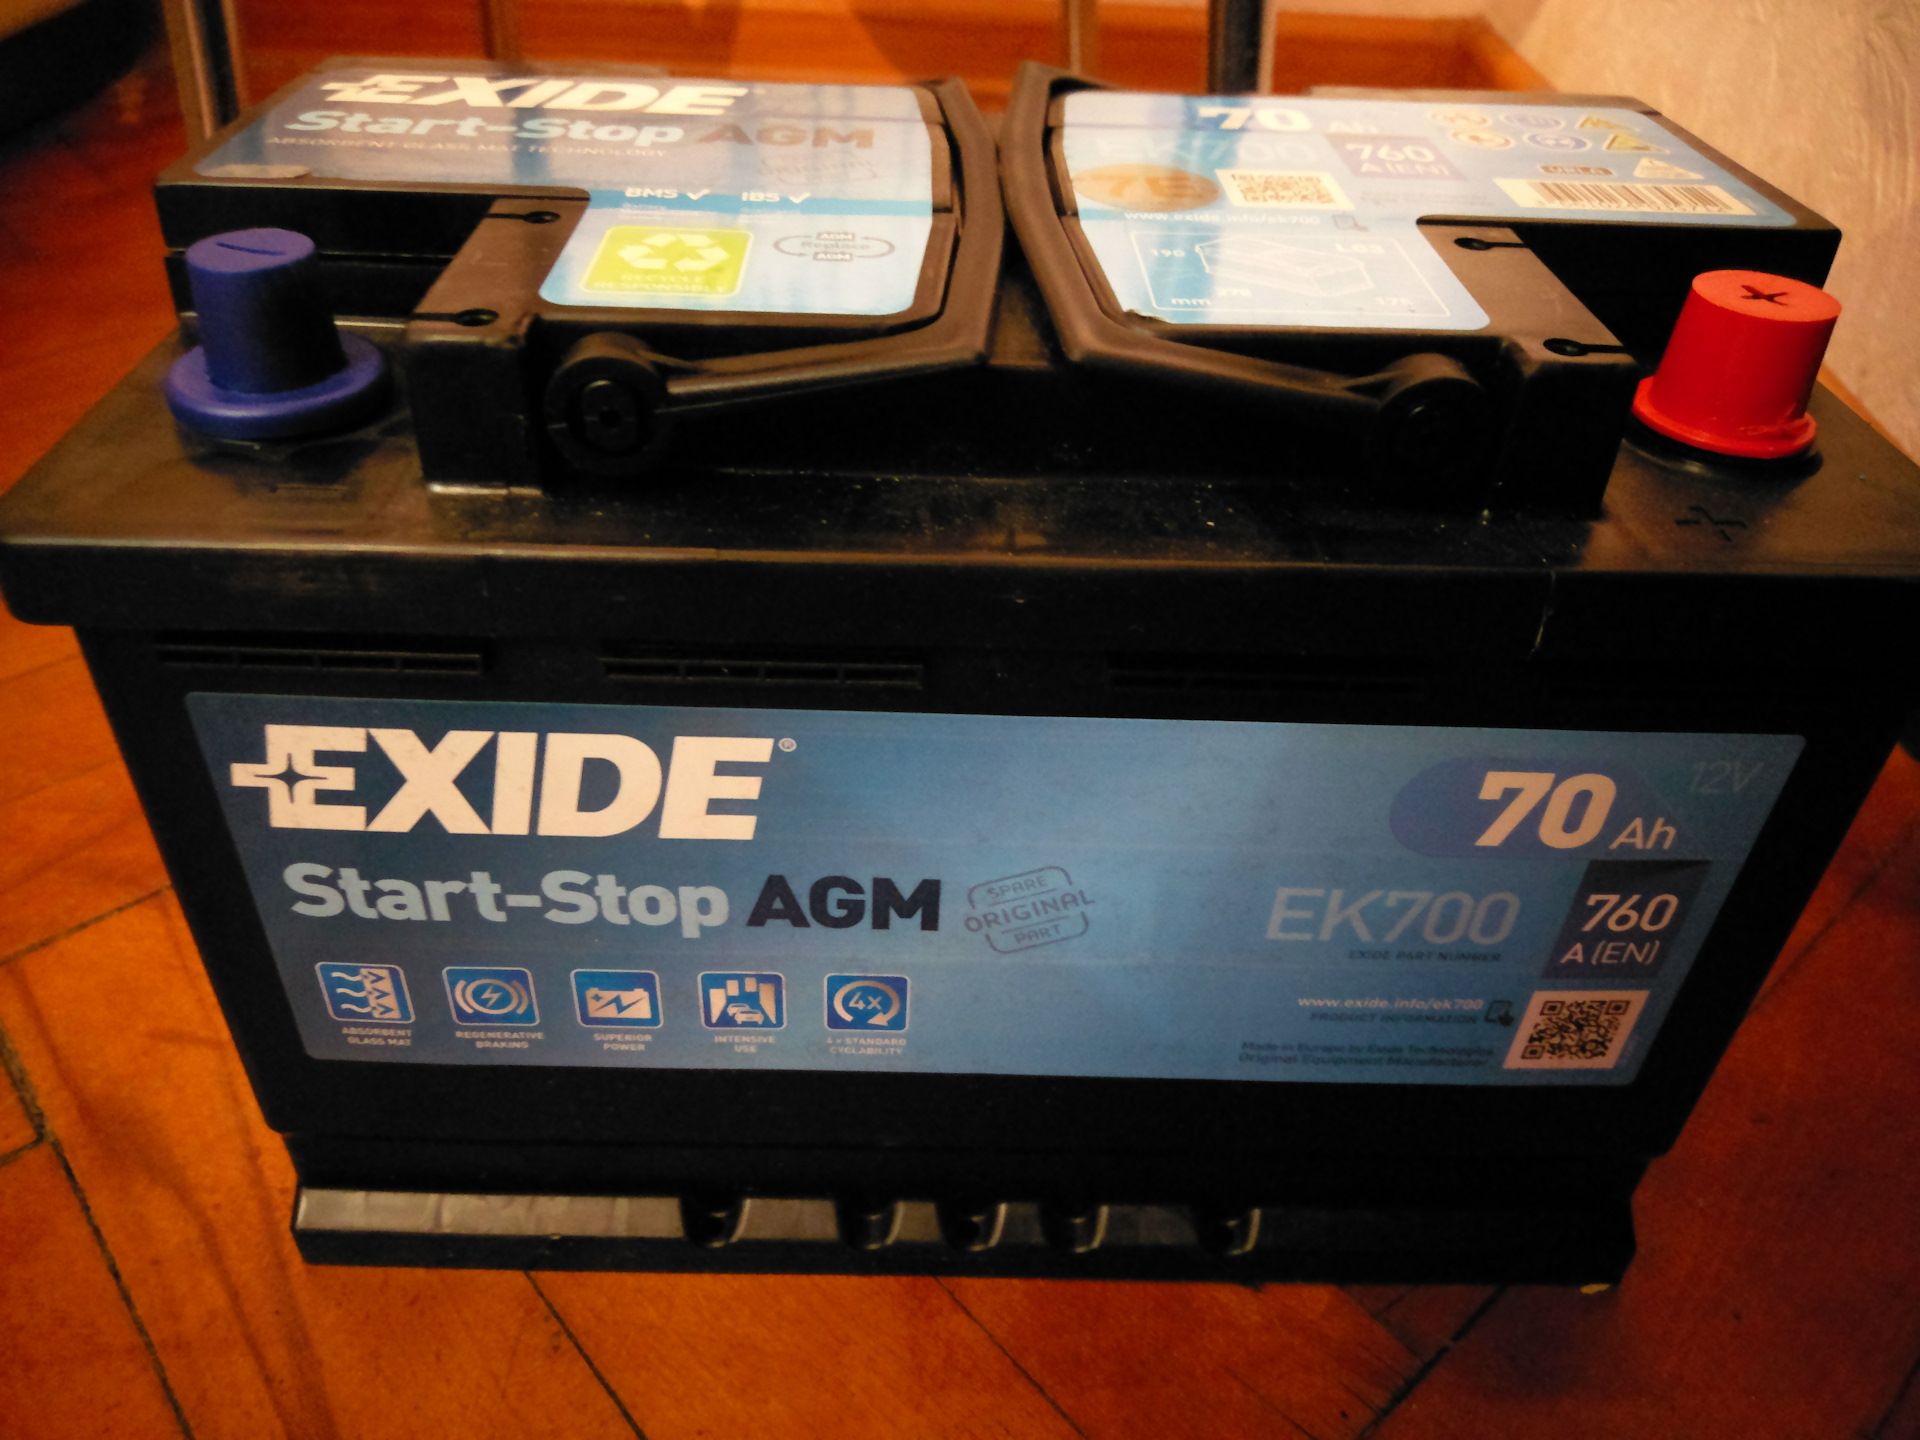 Аккумуляторы автомобильные start. Exide start-stop AGM ek700. Аккумулятор Шевроле Круз 1.8 Exide. АГМ аккумулятор 70а. Выпуск аккумулятора Exide ek700.